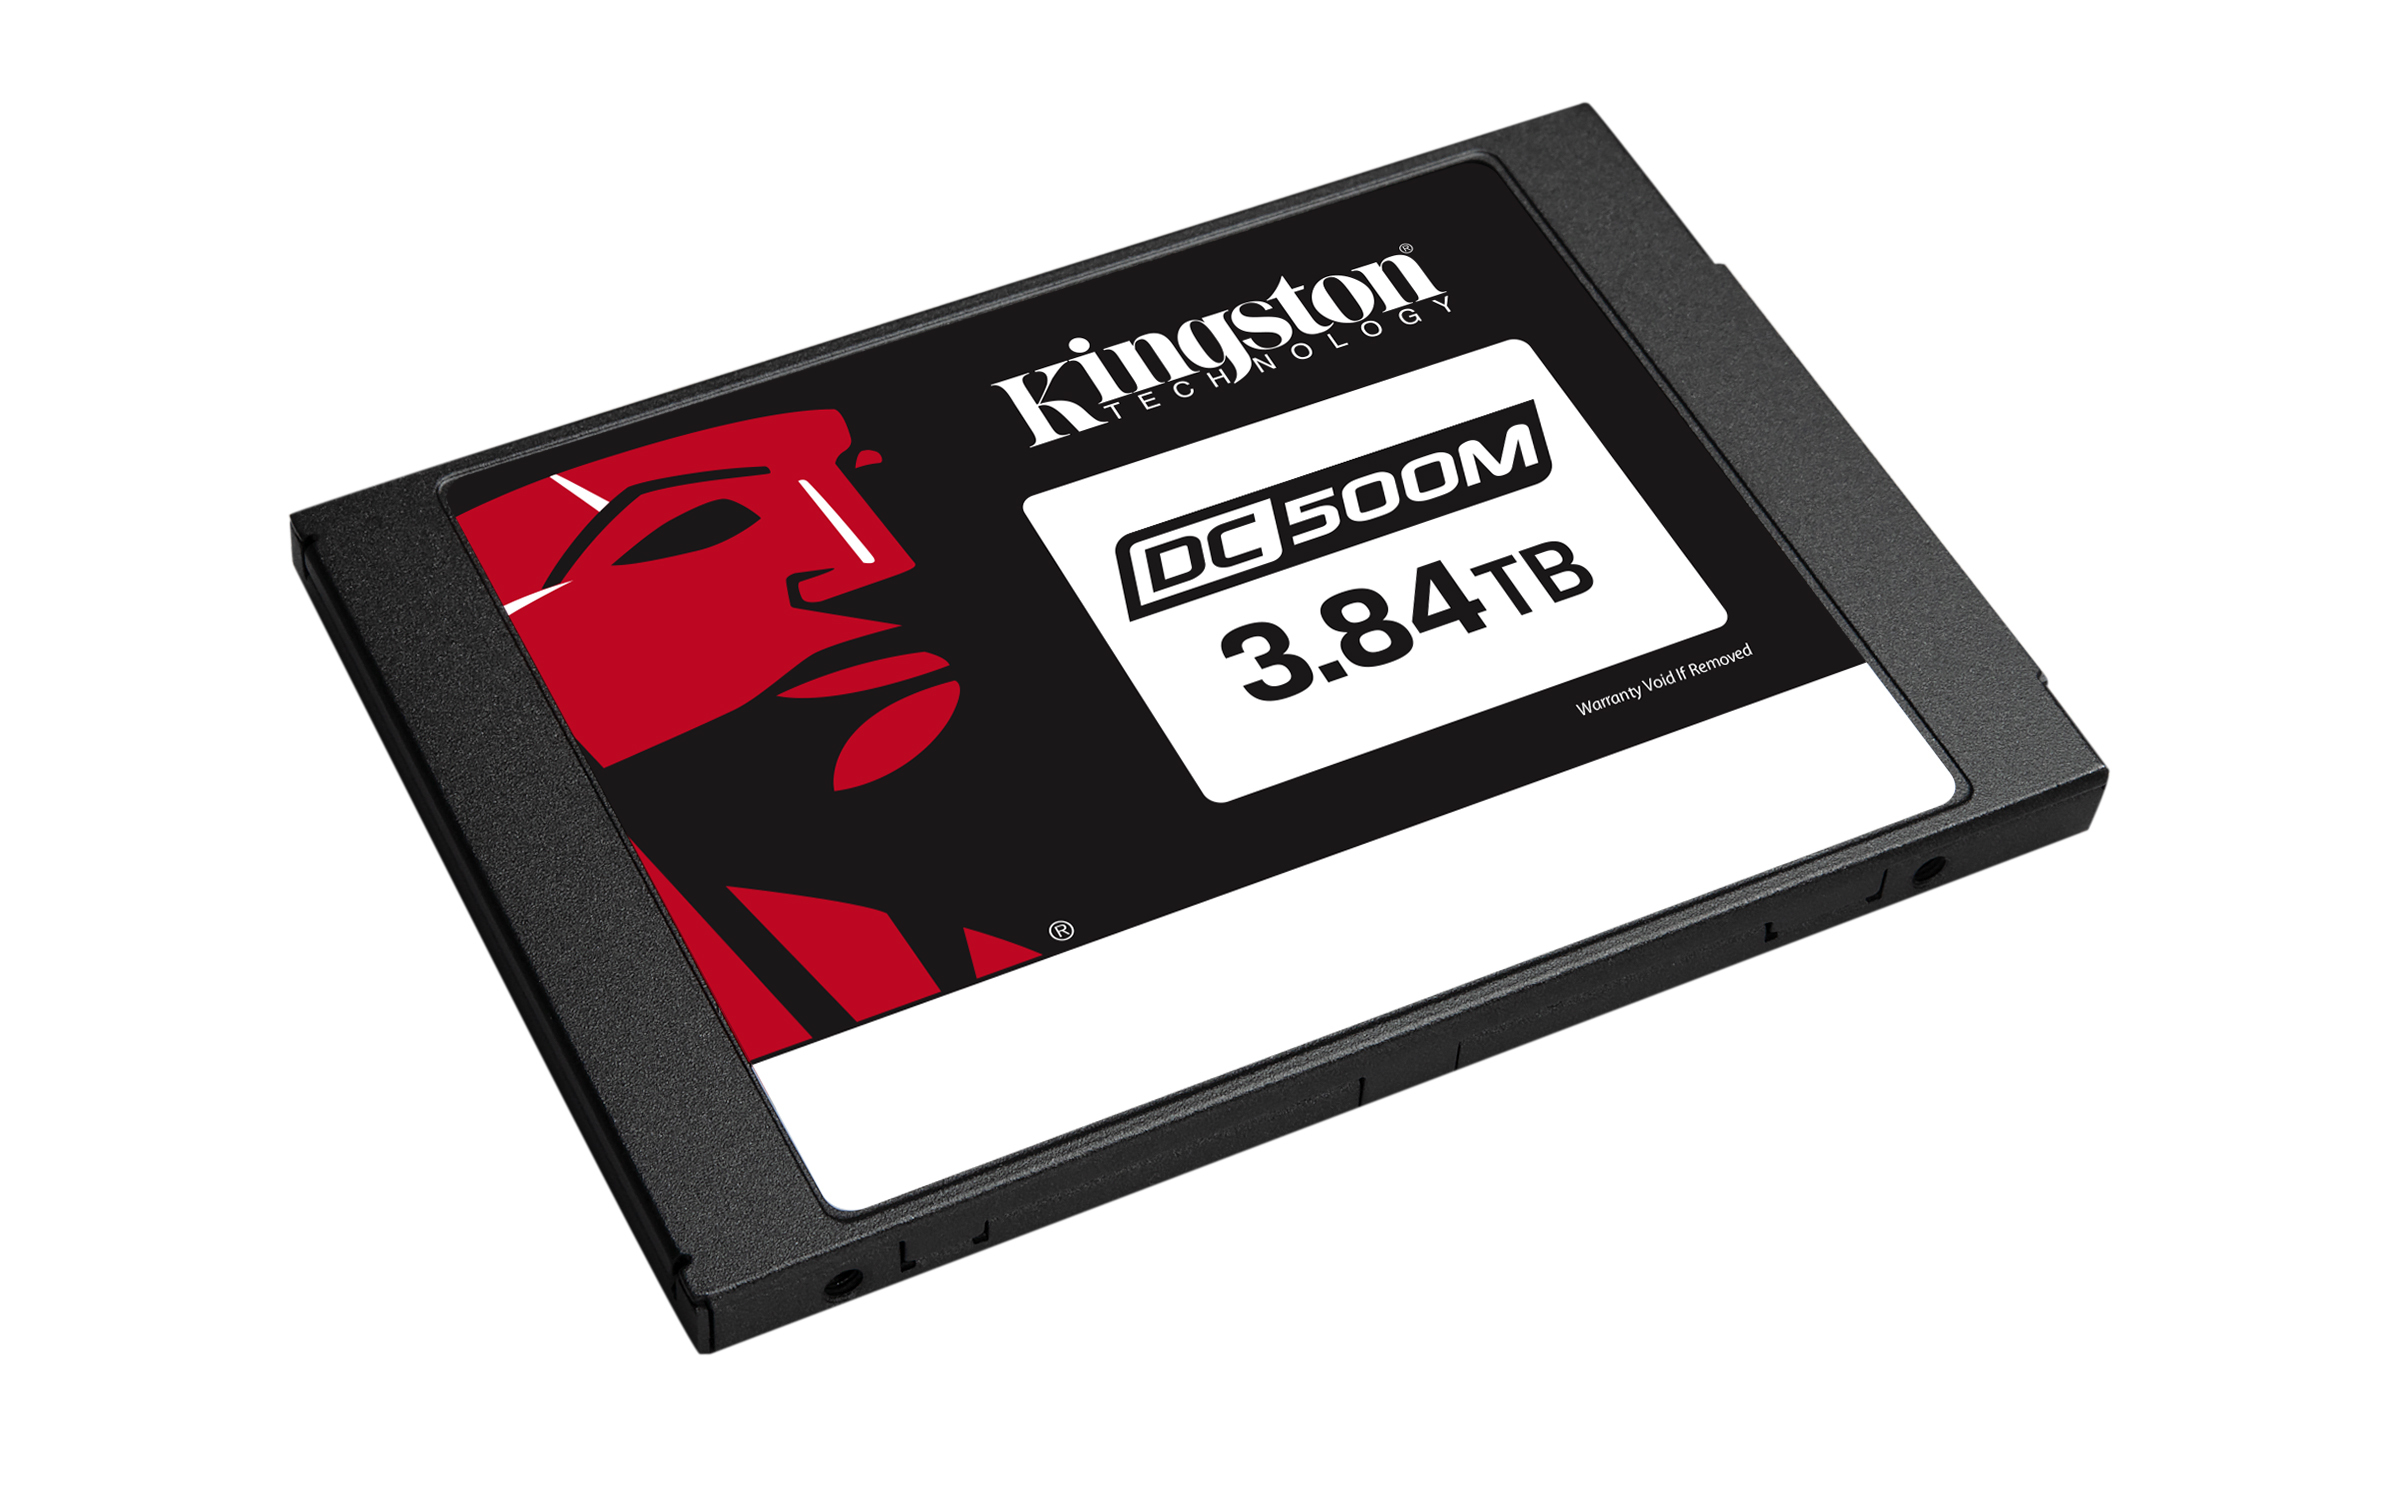 SSD Kingston Server  DC500M 3.84  TB 2.5" Data Center "Mixed Use" (SEDC500M/3840G) *++